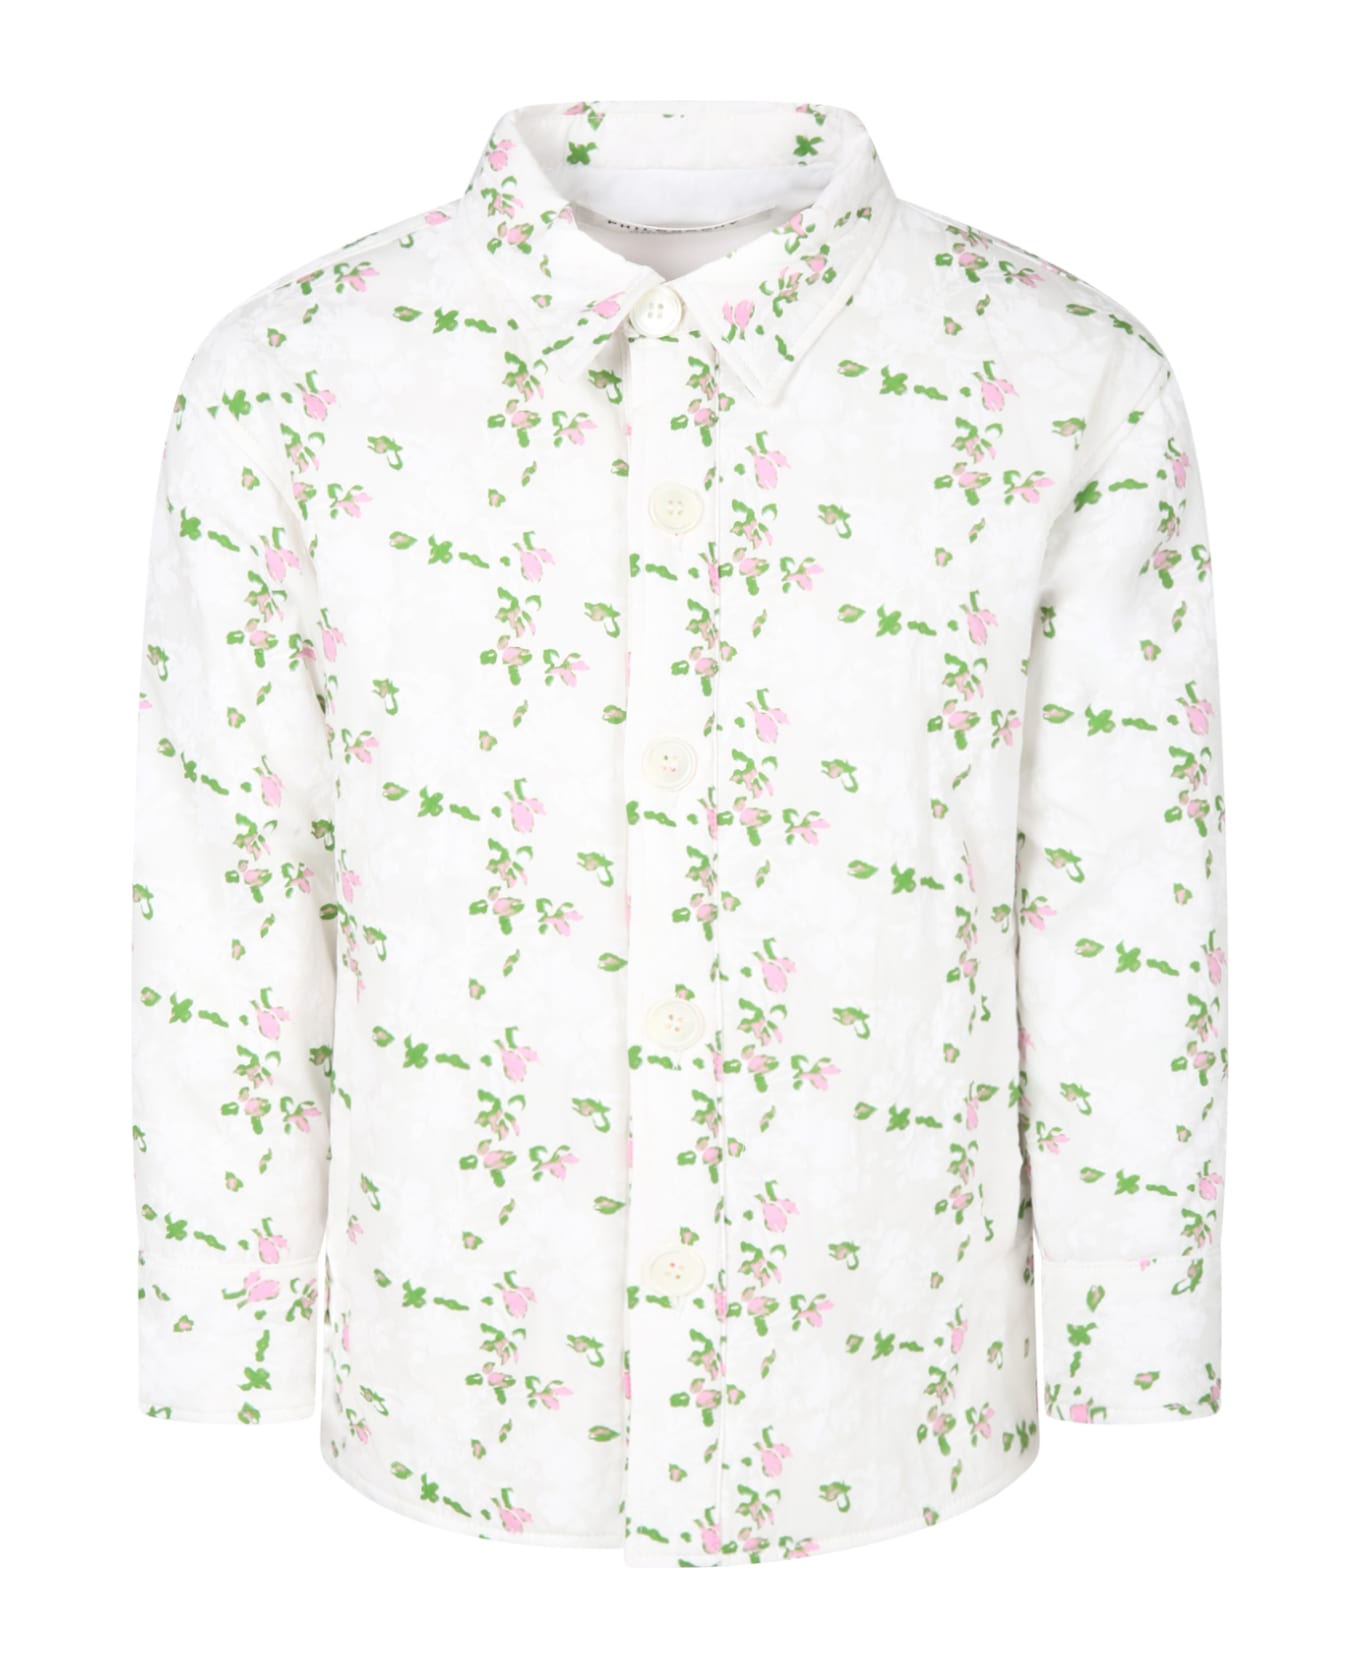 Philosophy di Lorenzo Serafini Kids T-shirt adidas Run It Aeroready preto With Flowers - White